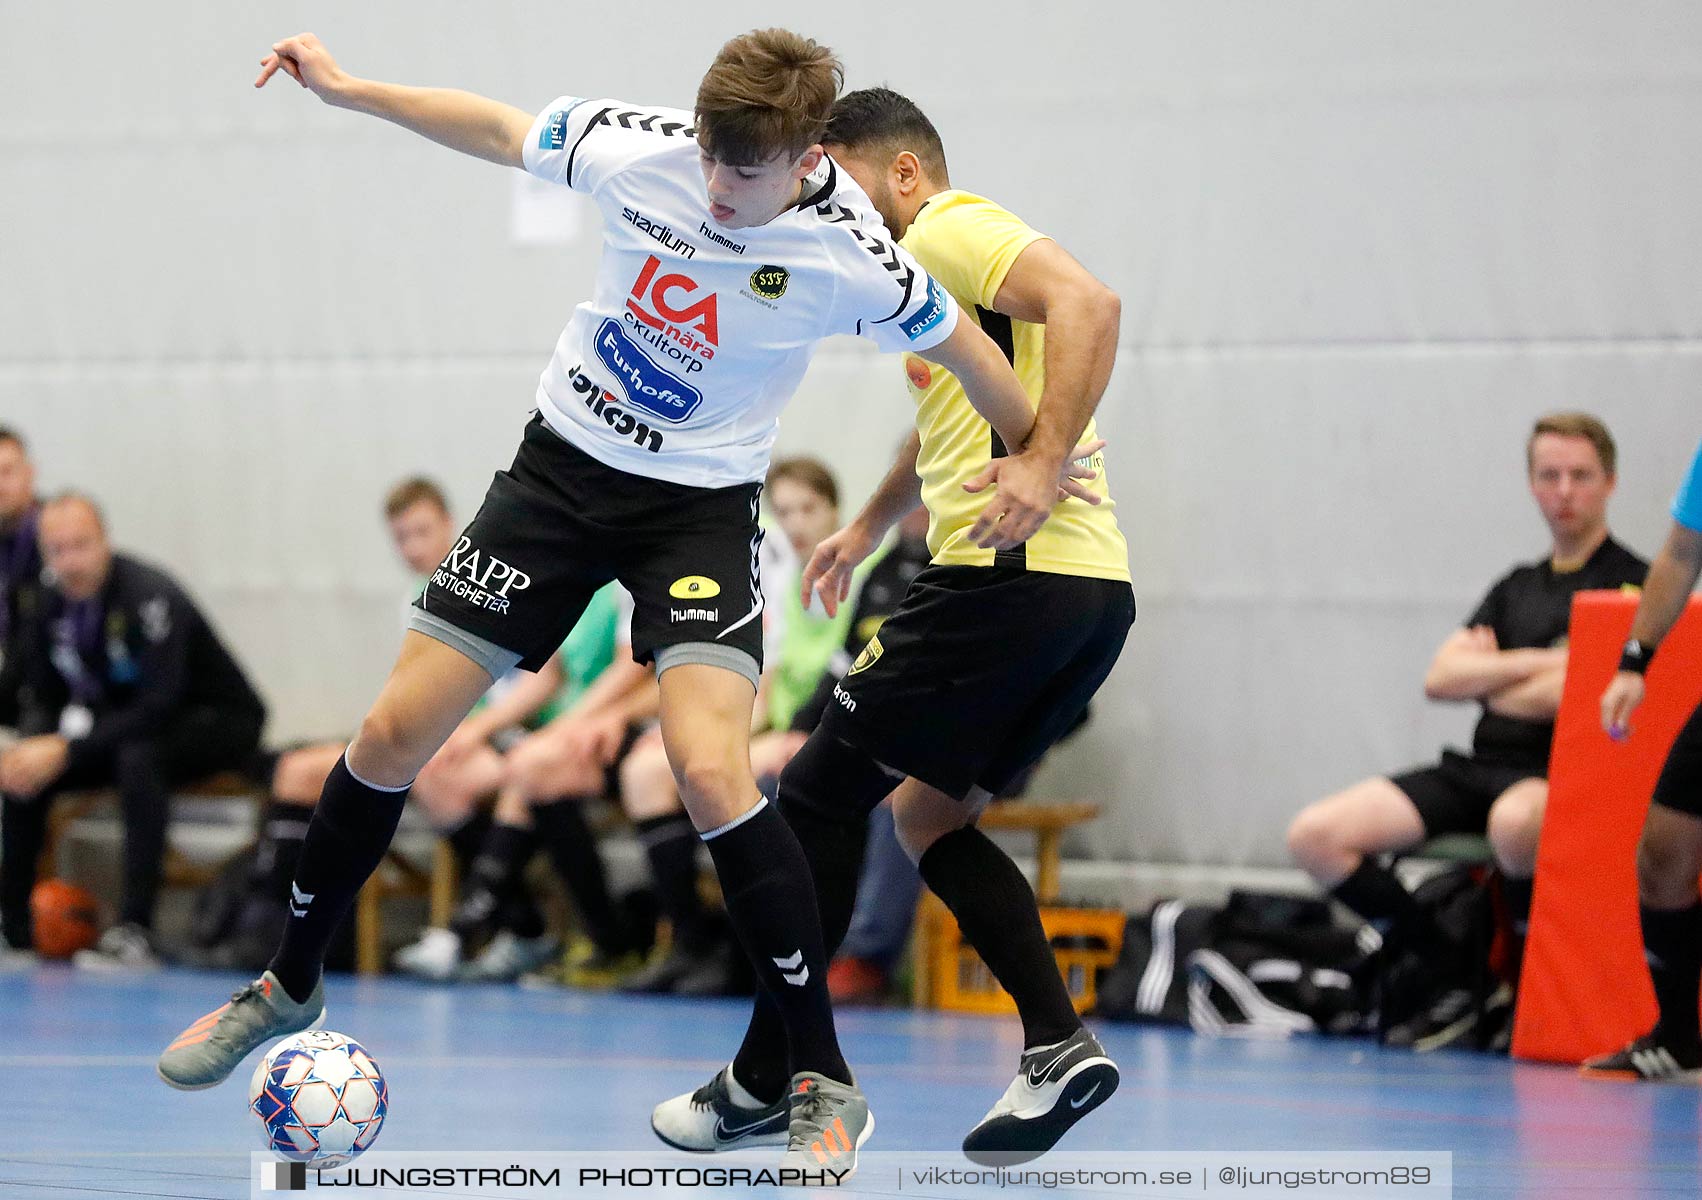 Skövde Futsalcup 2019 Herrar Elastico Futsal Club-Skultorps IF,herr,Arena Skövde,Skövde,Sverige,Futsal,,2019,227330